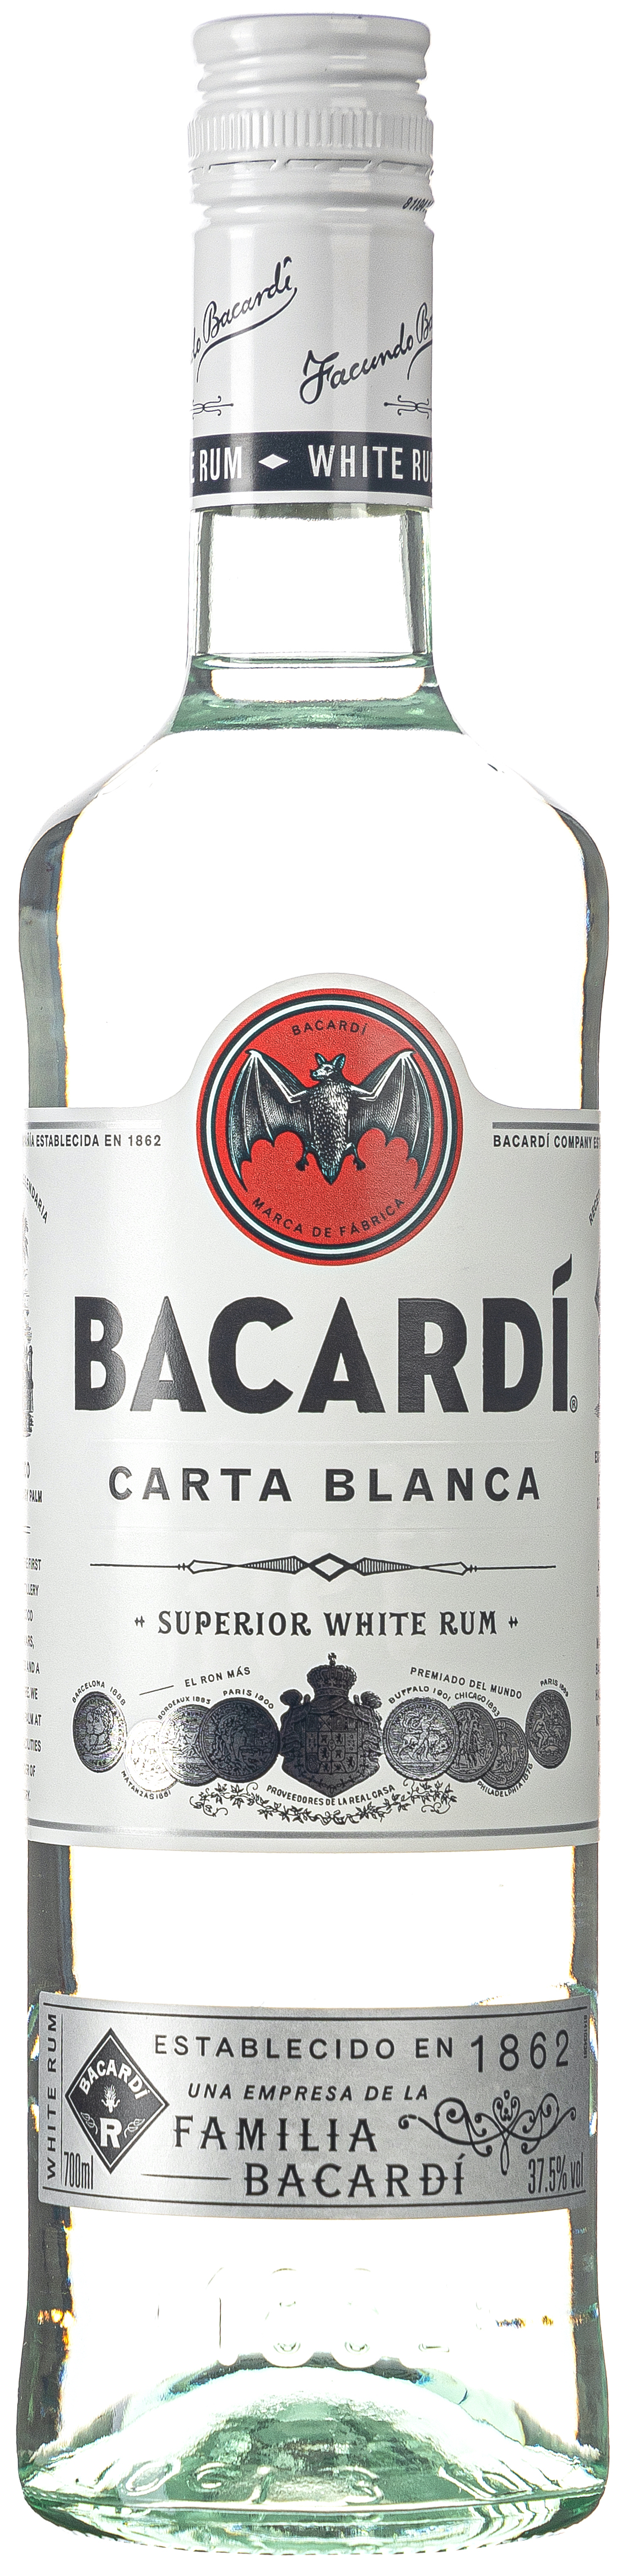 37,5% L 0,7 Blanca Carta Bacardi